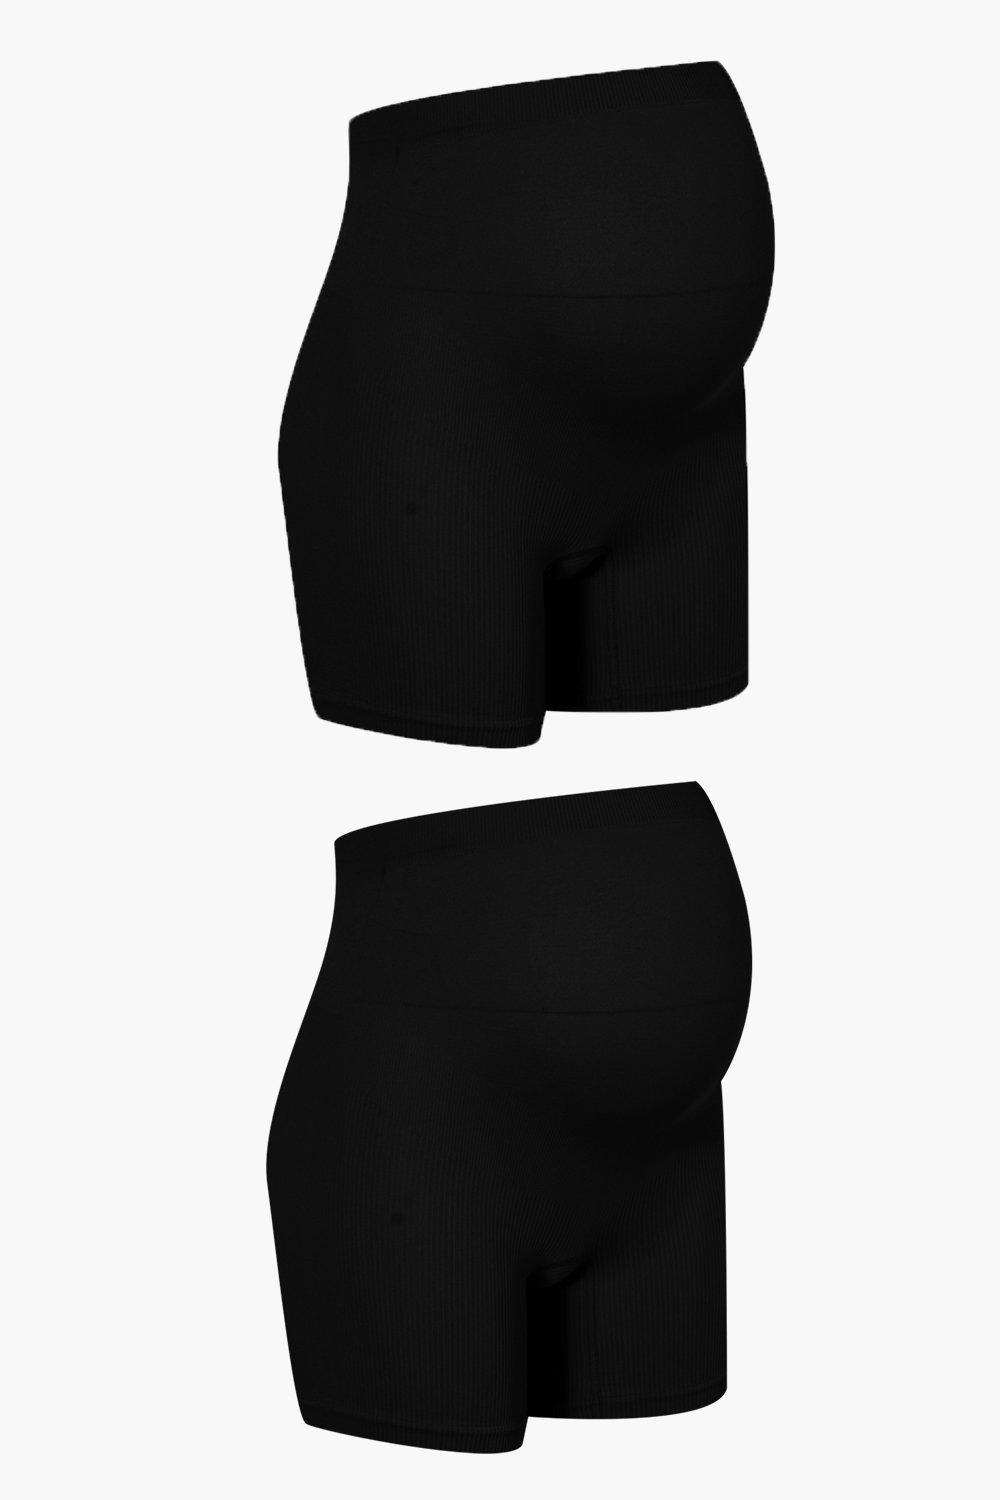 Belugue Women's Baby Bump Maternity Shapewear High Waist Seamless Support  Soft Pregnancy Panties Shorts - Black - Large - ShopStyle